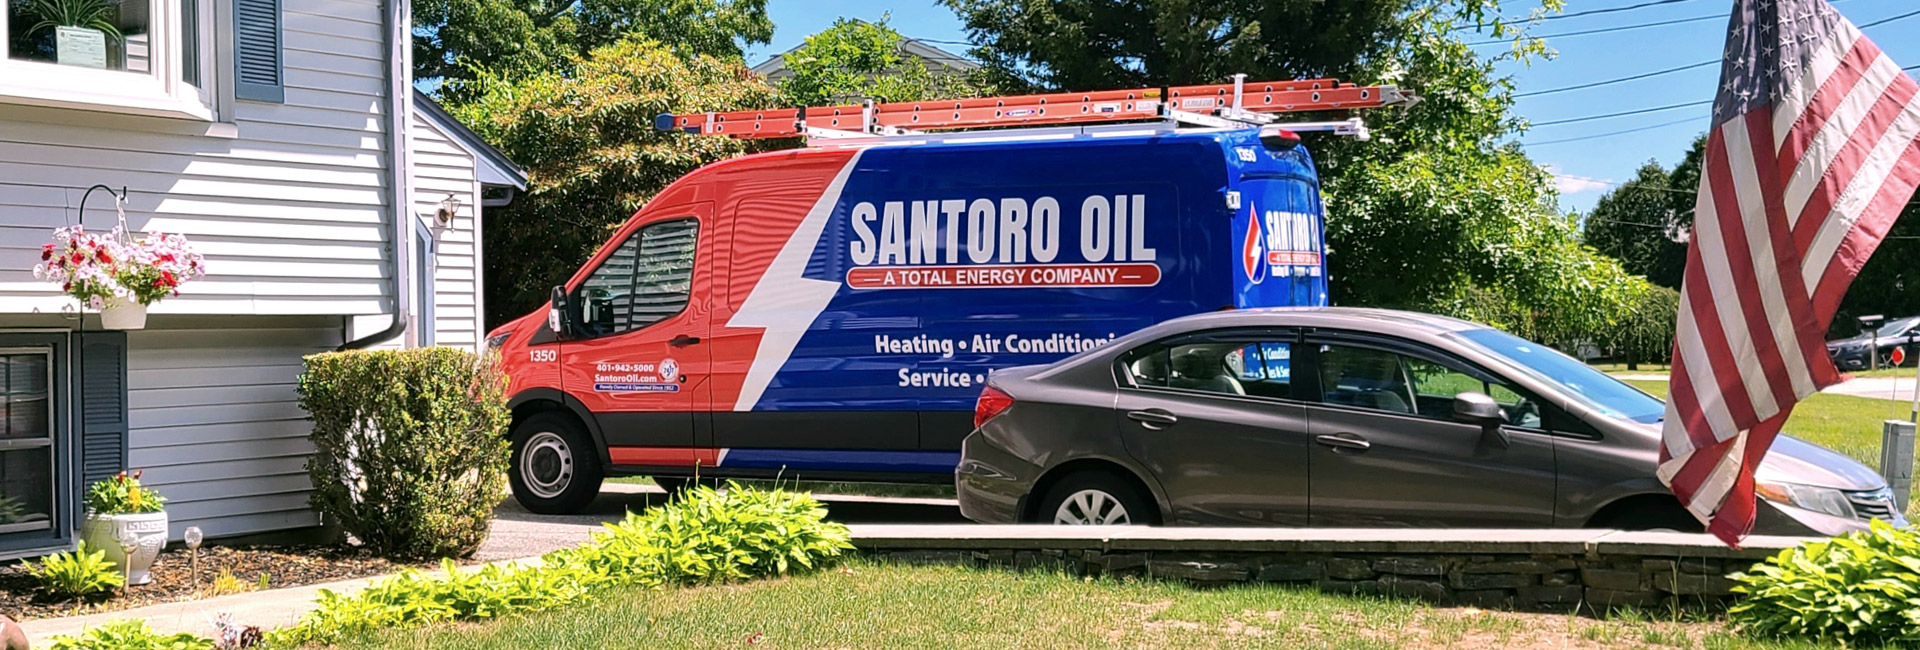 Santoro Oil service truck onsite at a home in RI or Southeastern MA